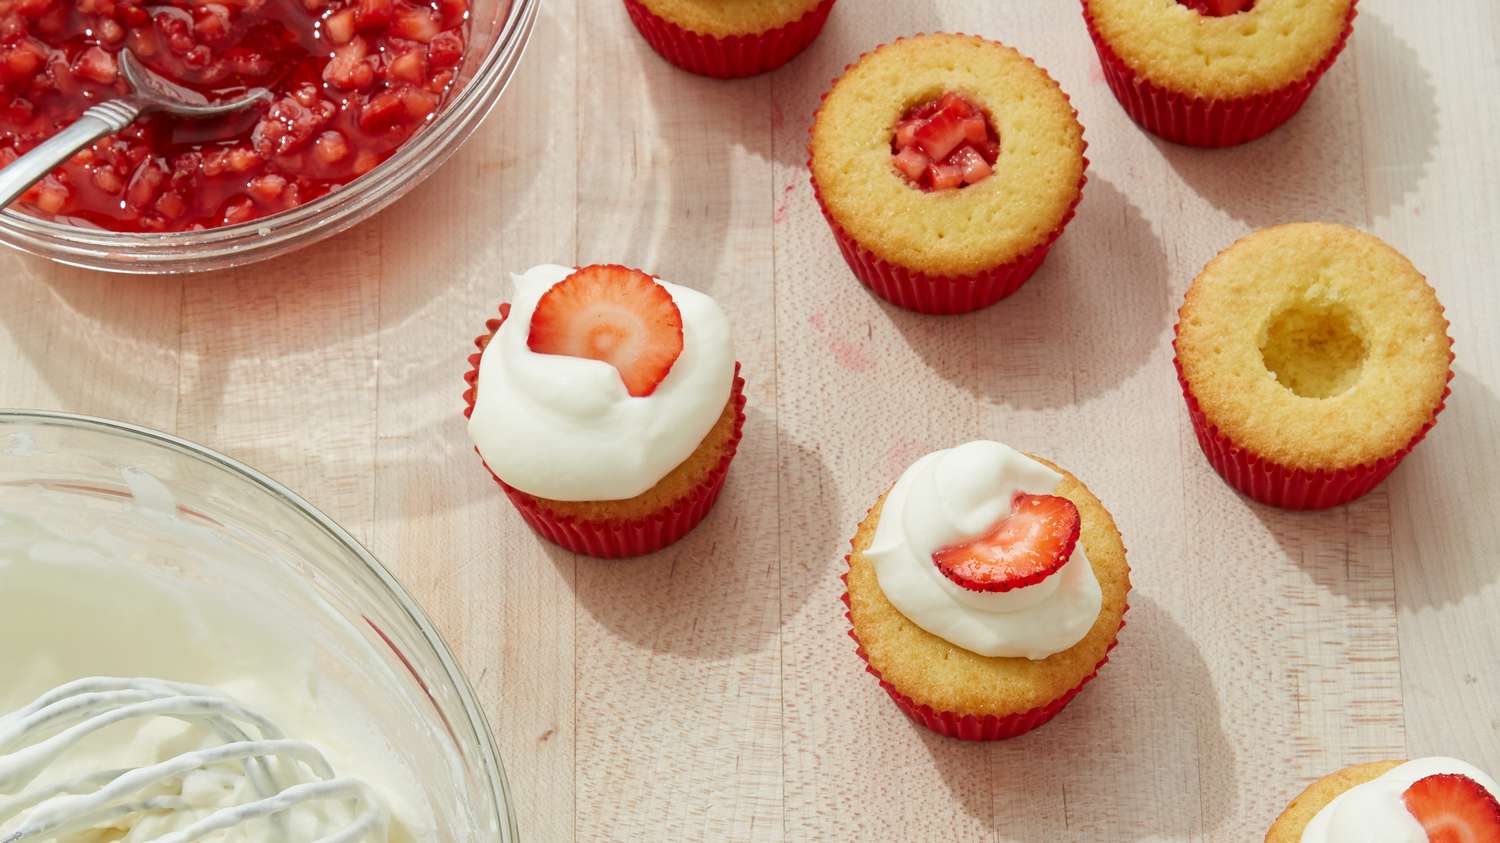 strawberry-cupcakes-3627-d112594.jpg